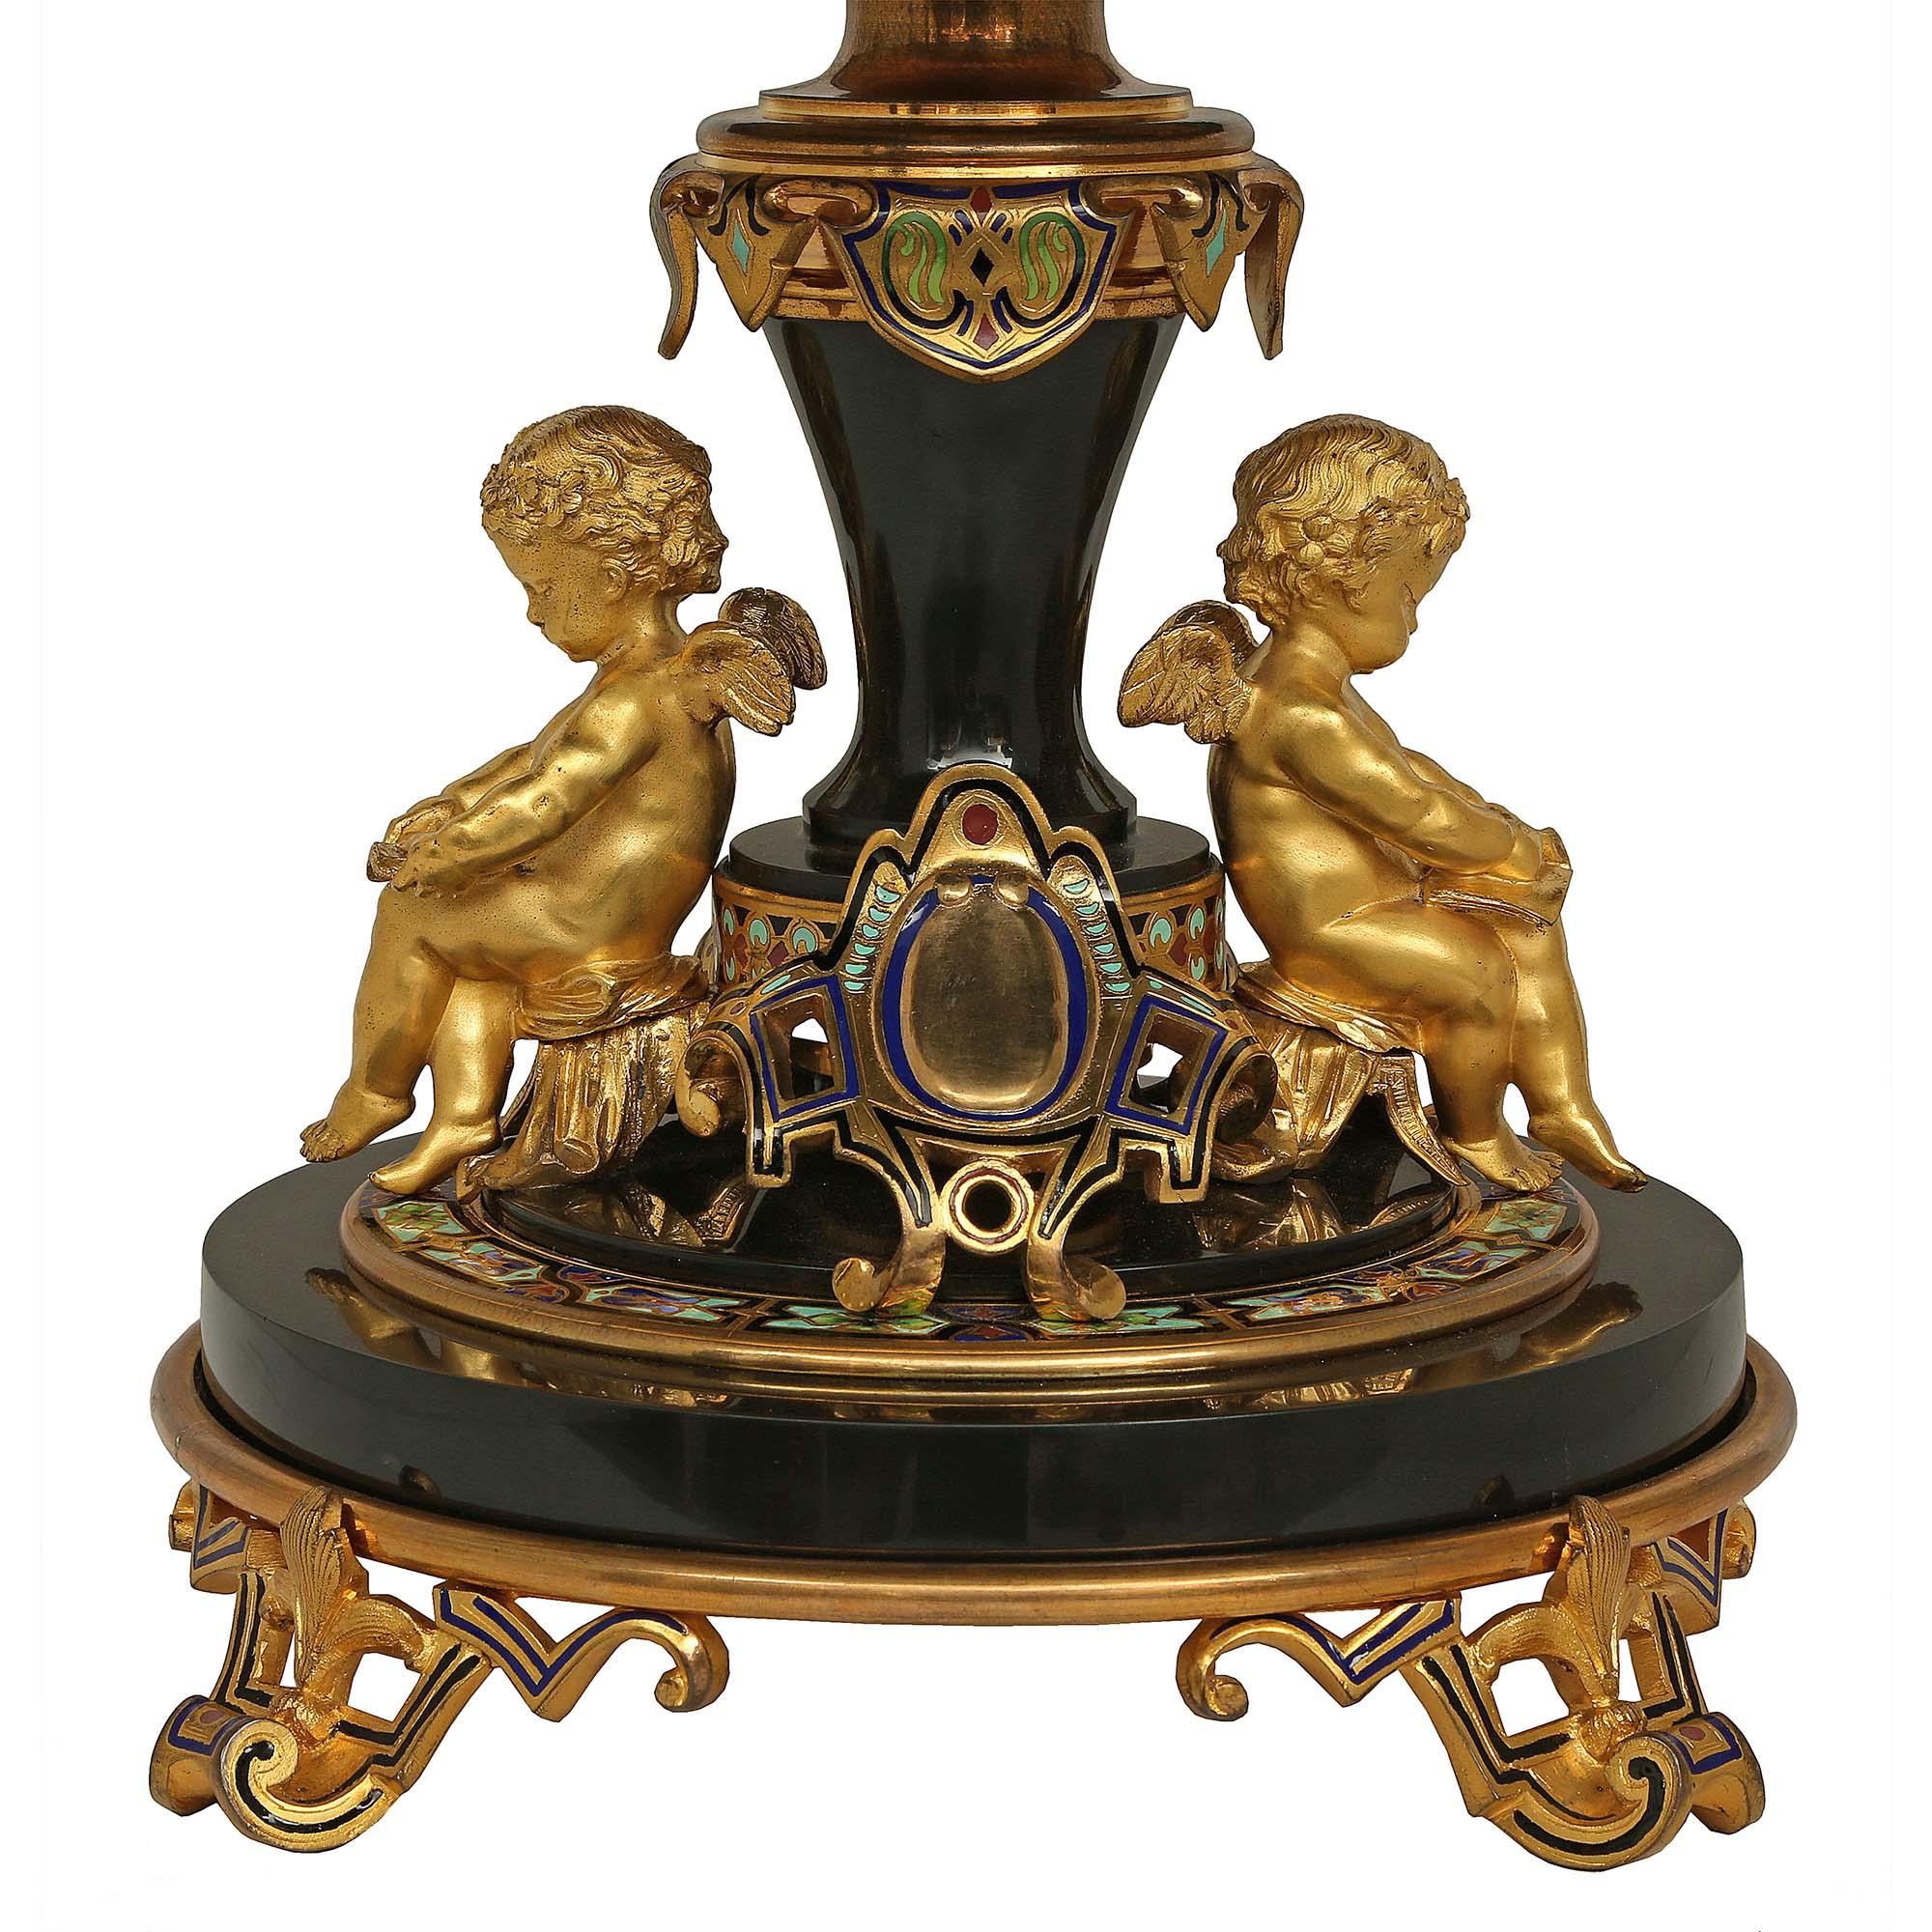 French 19th Century Belle Époque Period Marble, Ormolu and Cloisonné Centerpiece For Sale 4